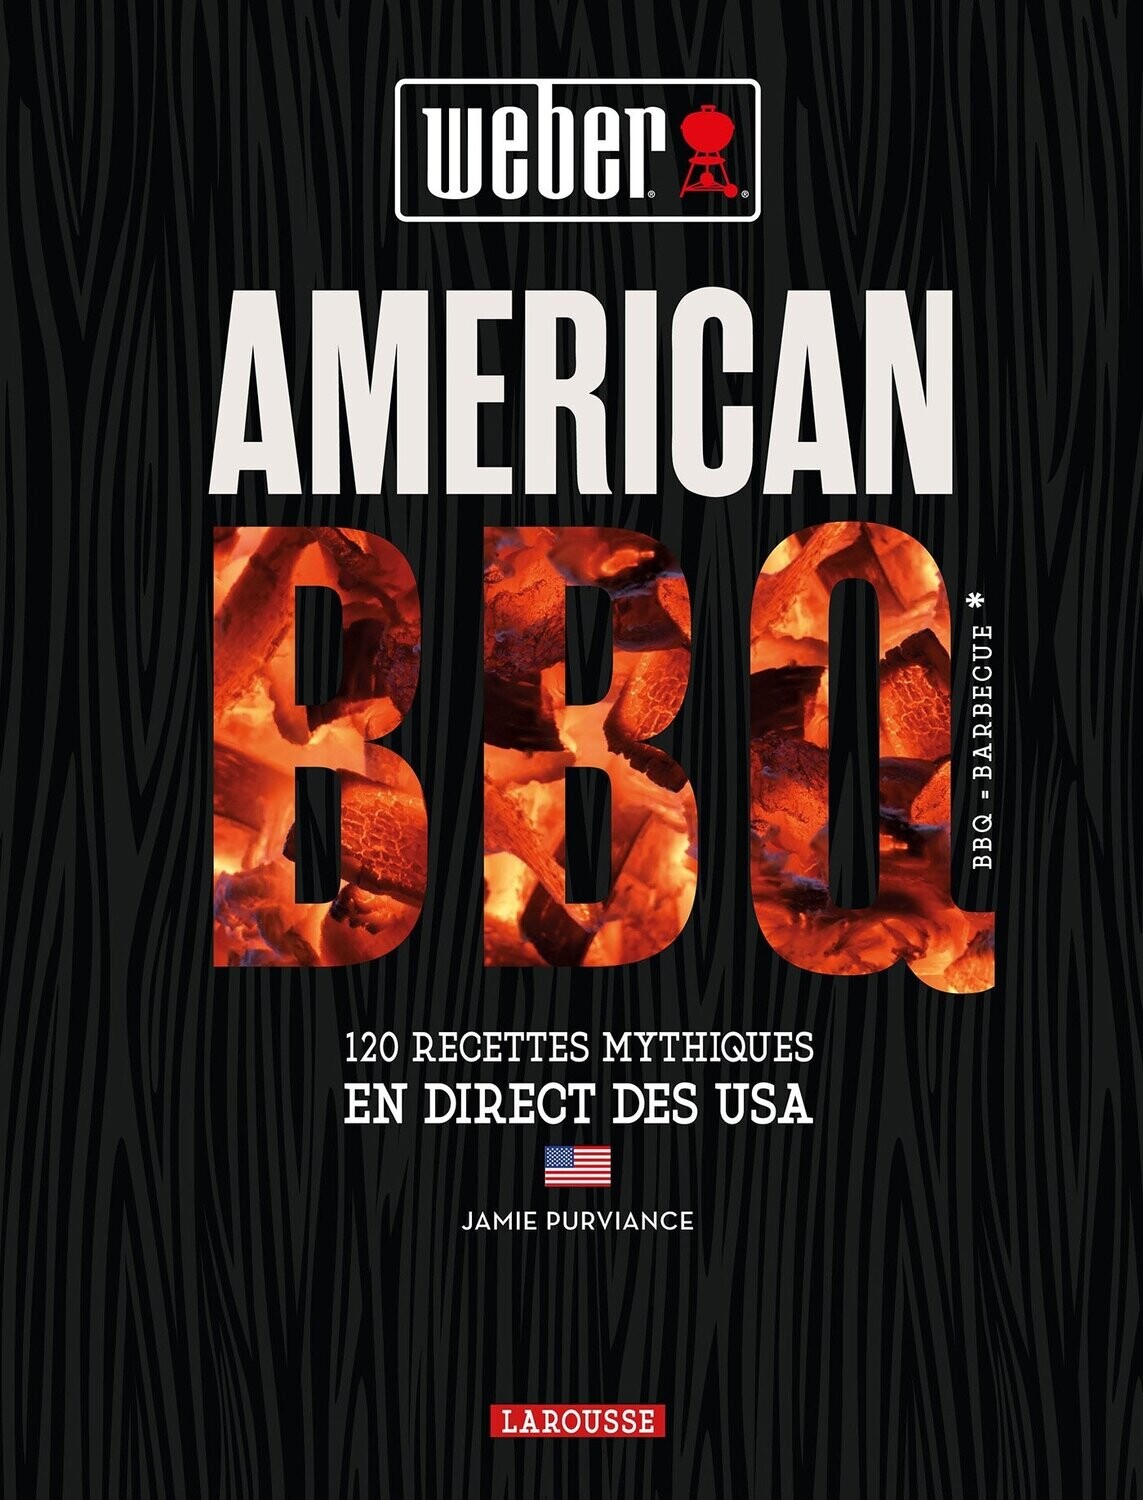 Livre de recettes Weber "American BBQ"